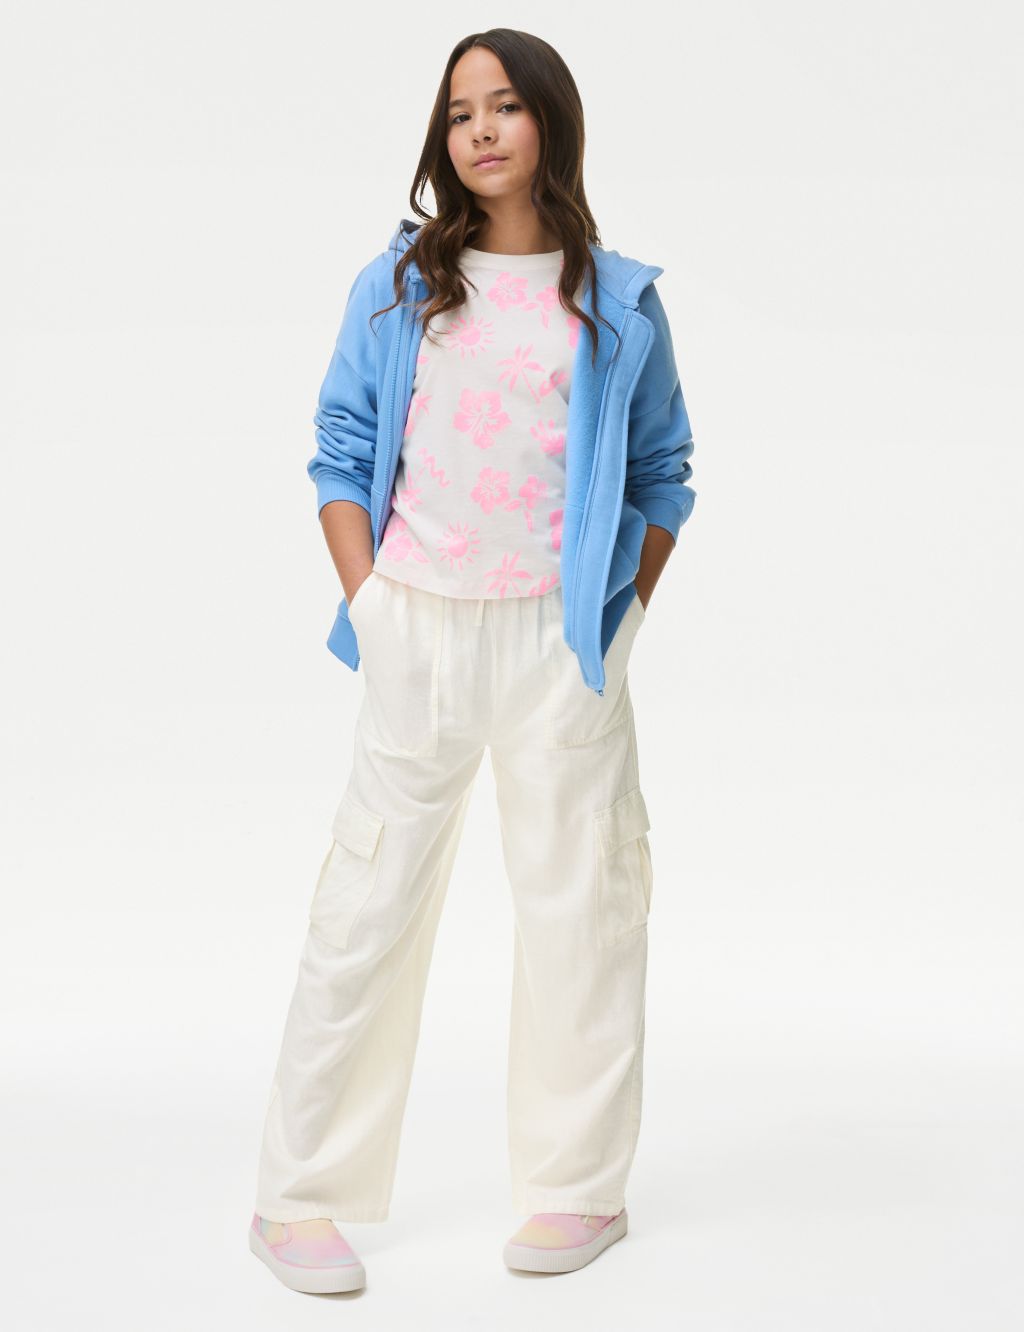 Kids Children Cotton linen Tops+Wide Leg Pants Outfits Girls Summer Clothes  Sets